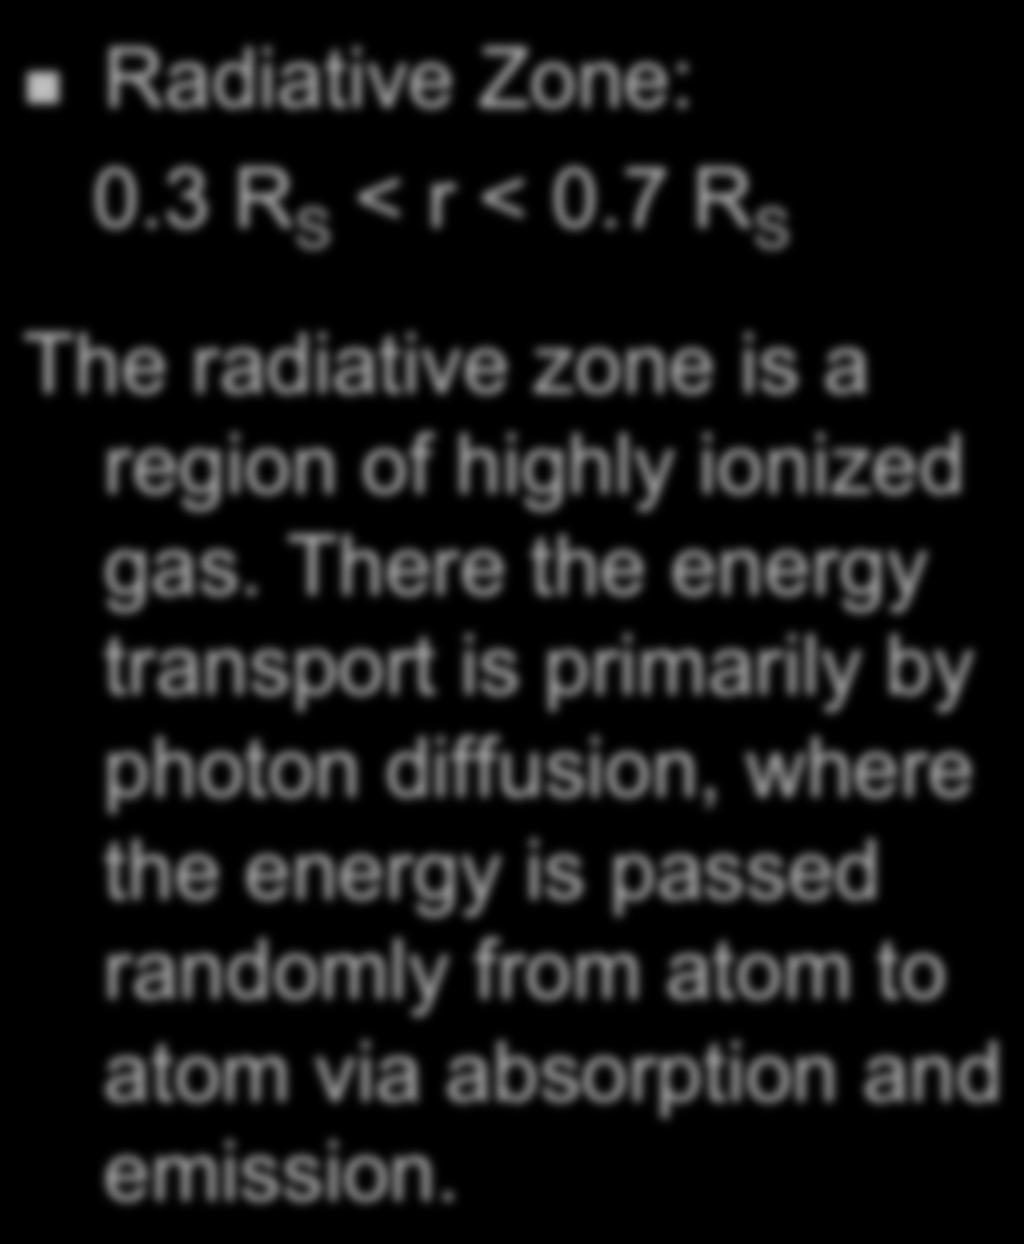 " Radiative Zone: 0.3 R S < r < 0.